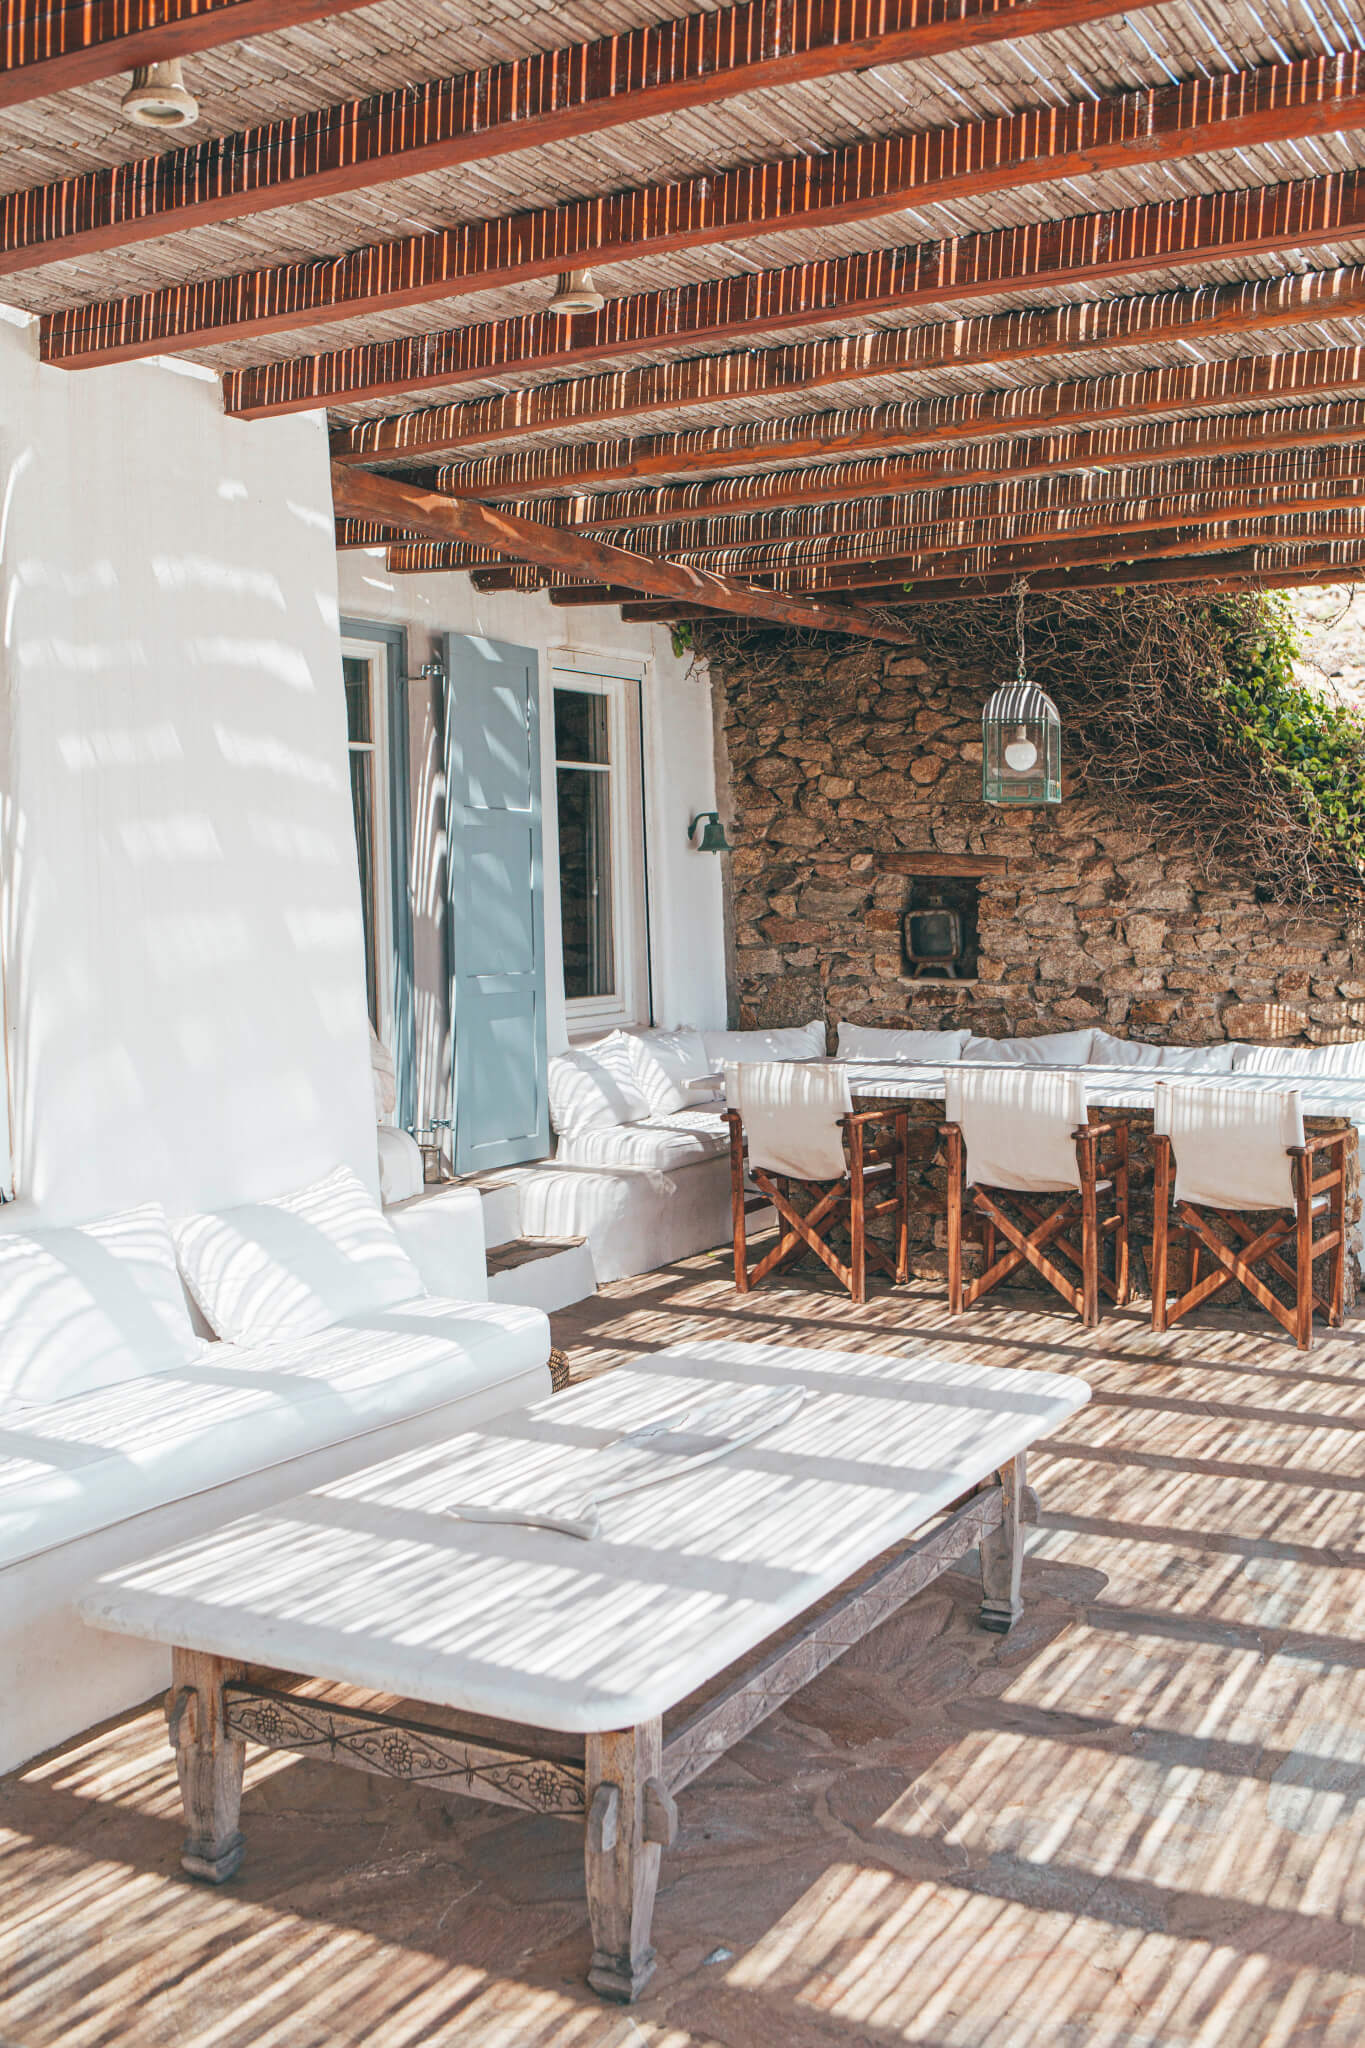 Dolce-Vita-Mykonos-Villa-25-of-44 Our Stay at Mykonos Luxury Villa Dolce Vita